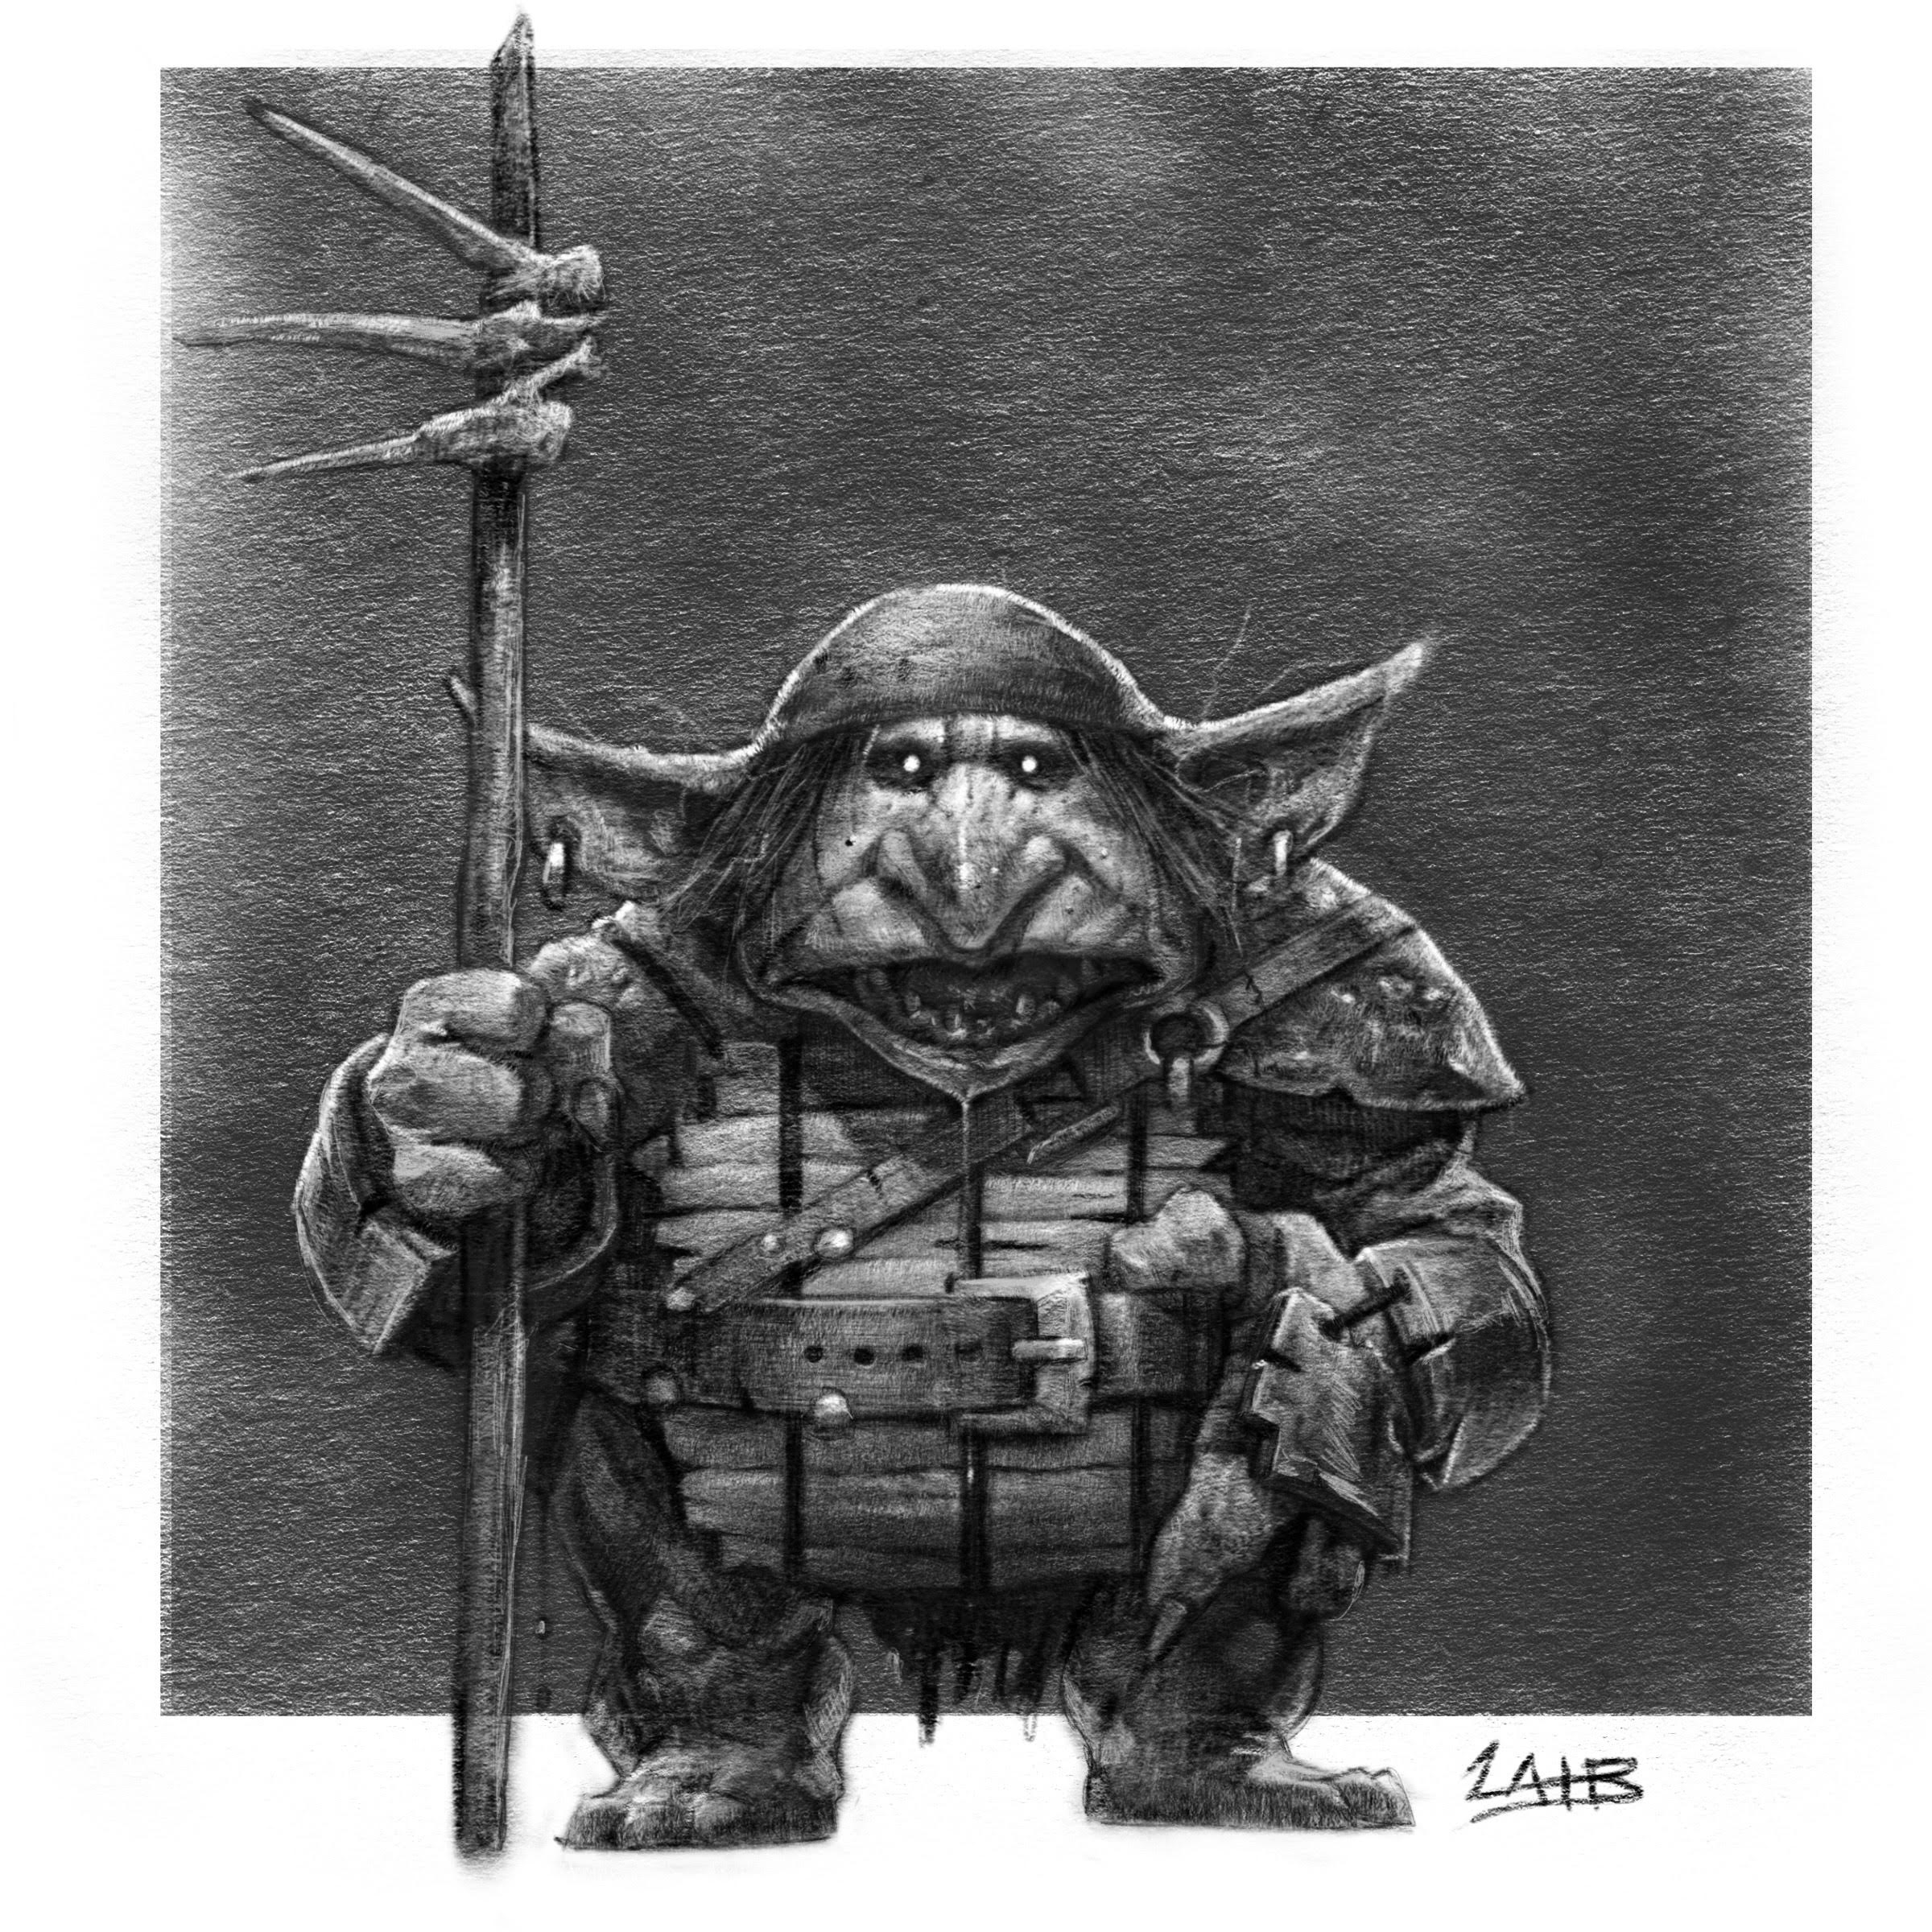 art by Gary Laib of a goblin